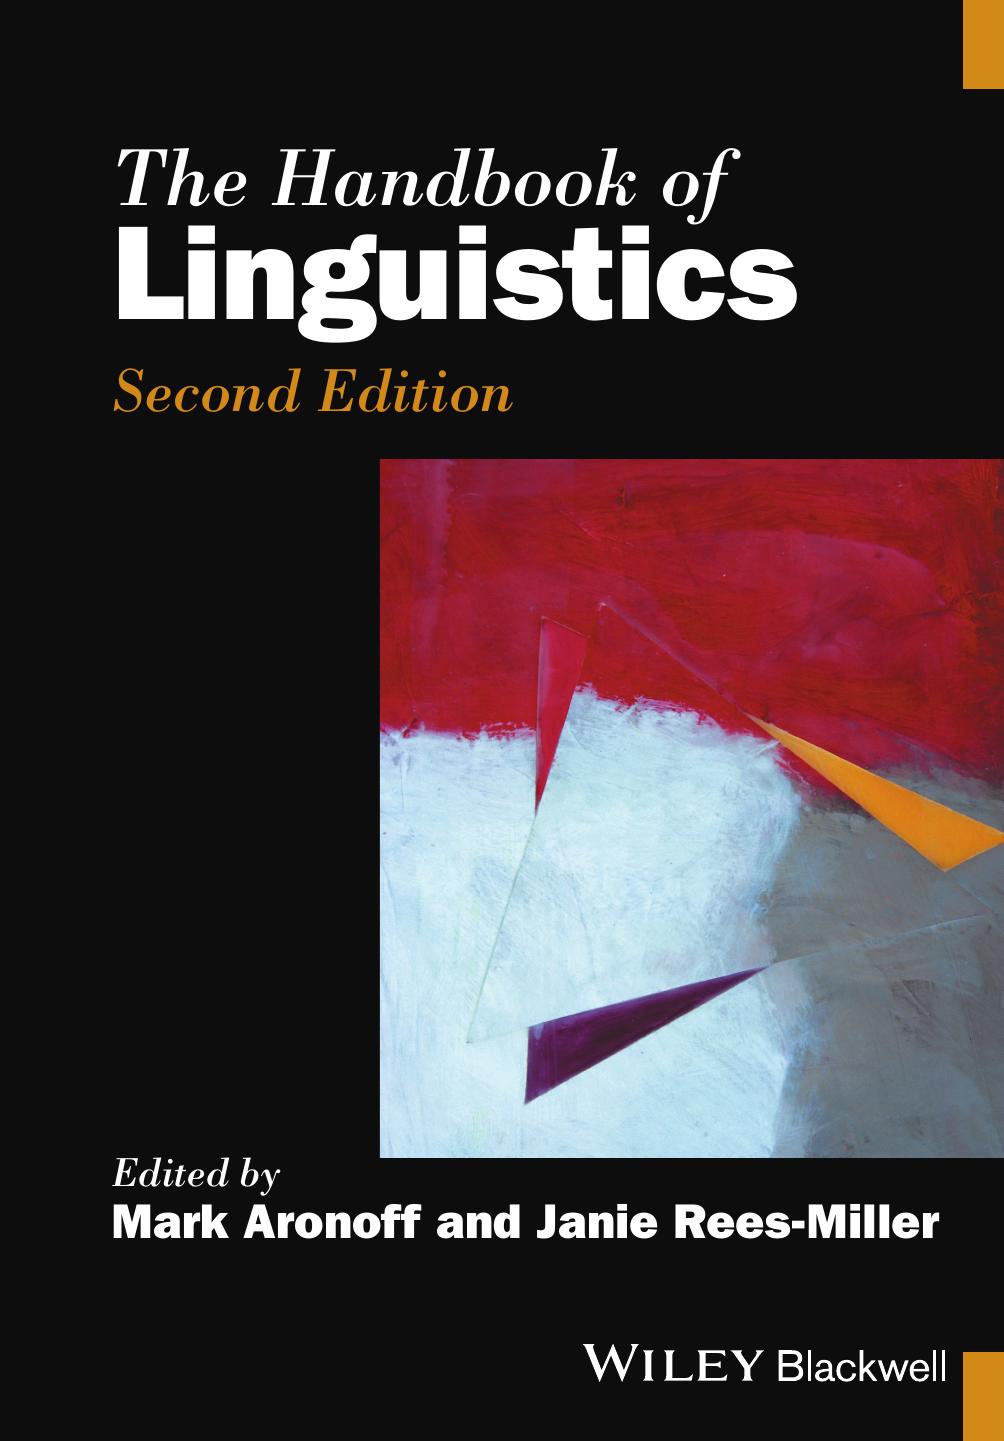 The Handbook of Linguistics, 2nd. Edition